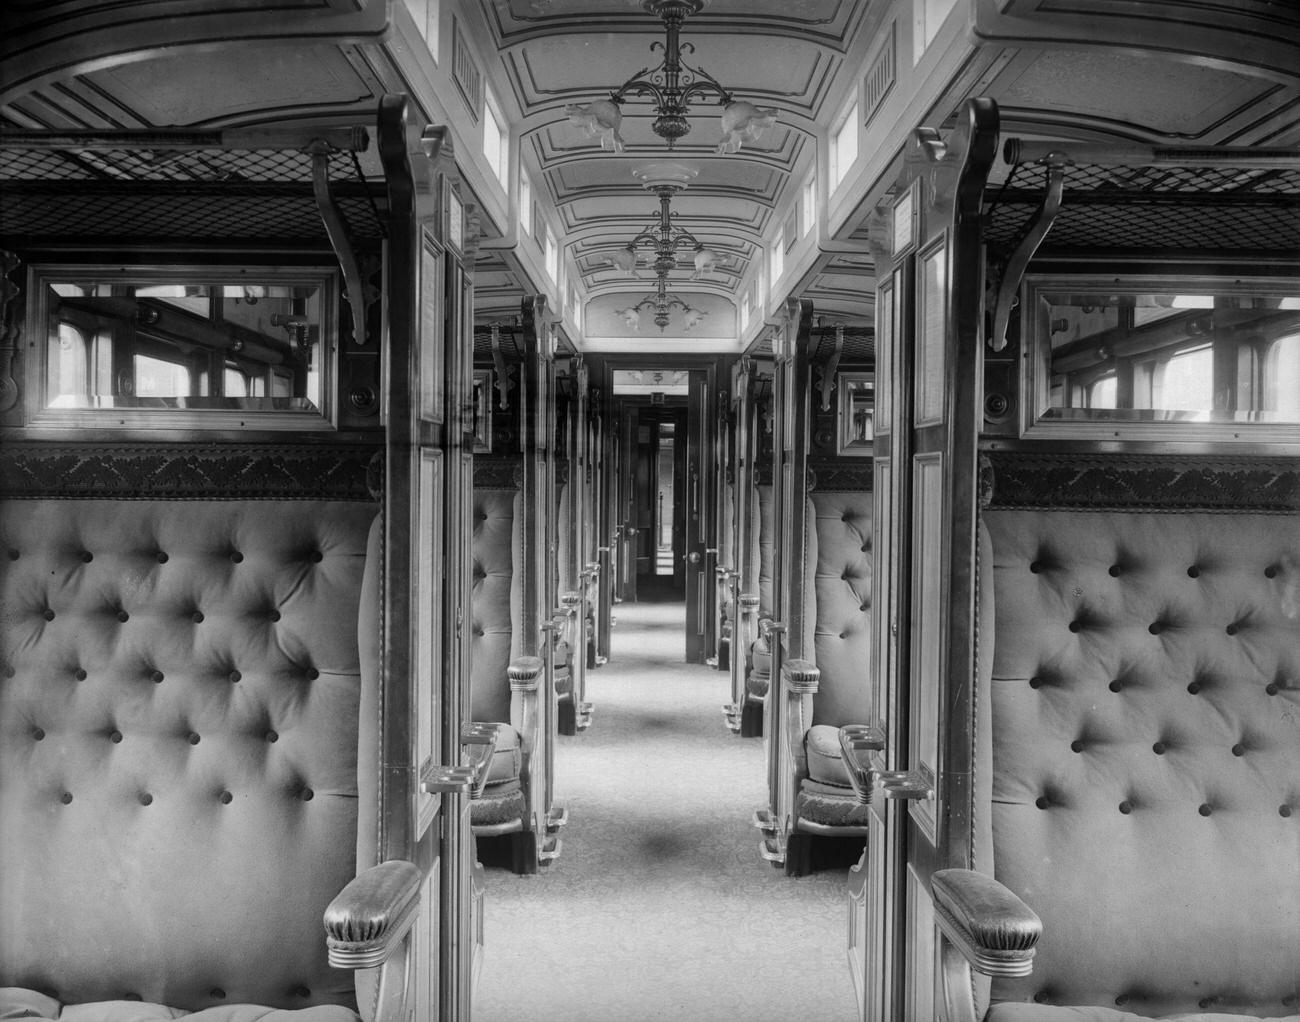 Interior of a Great Western Railway's buffet saloon car.